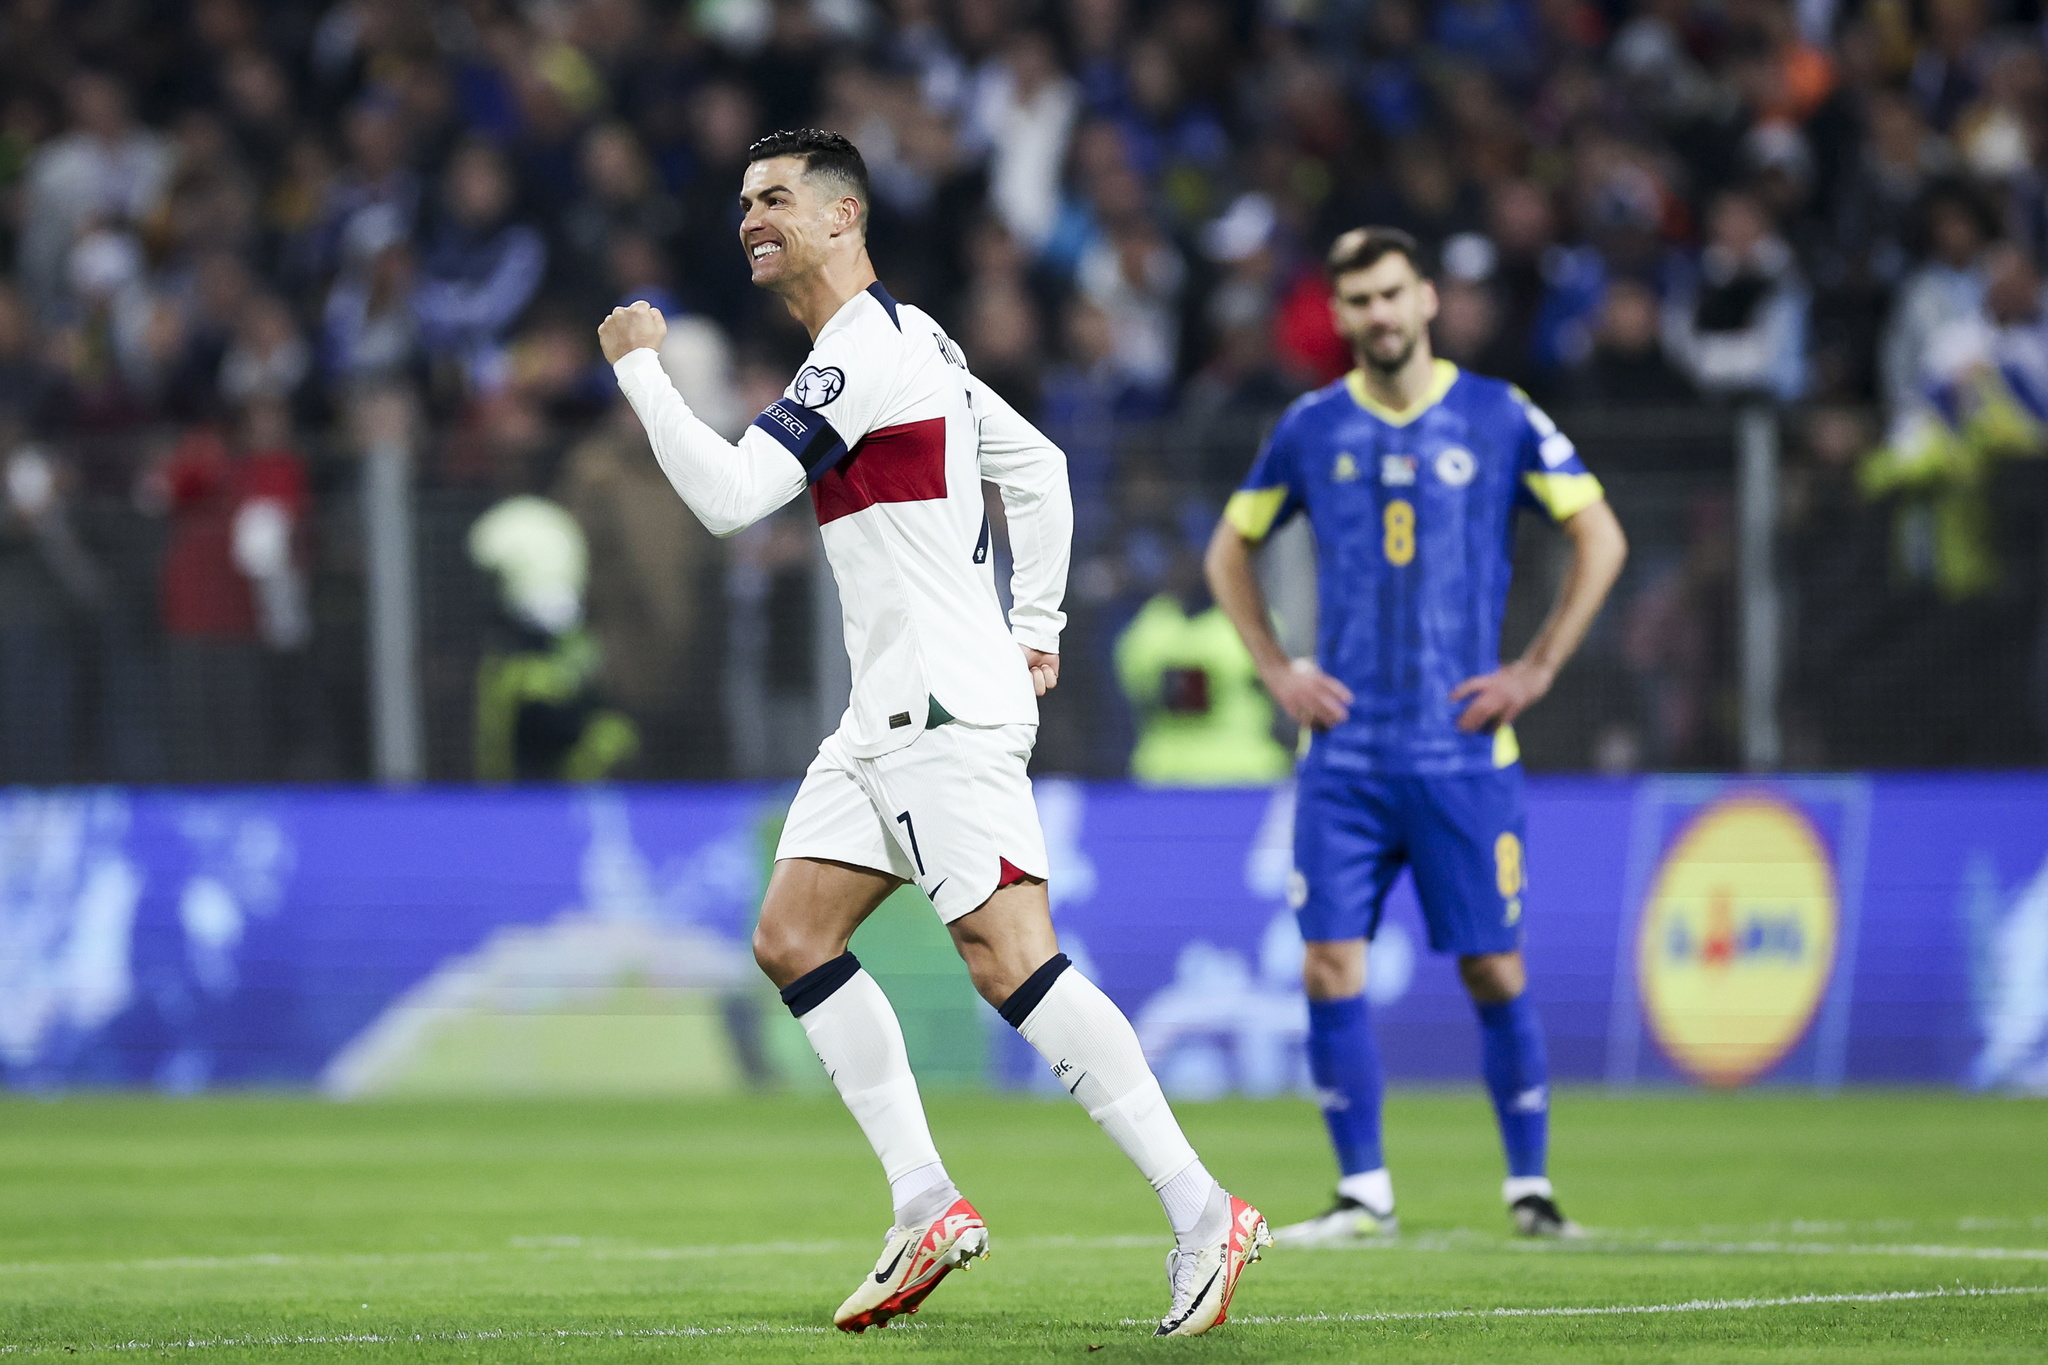 Cristiano Ronaldo celebrates after scoring the 1-0 goal